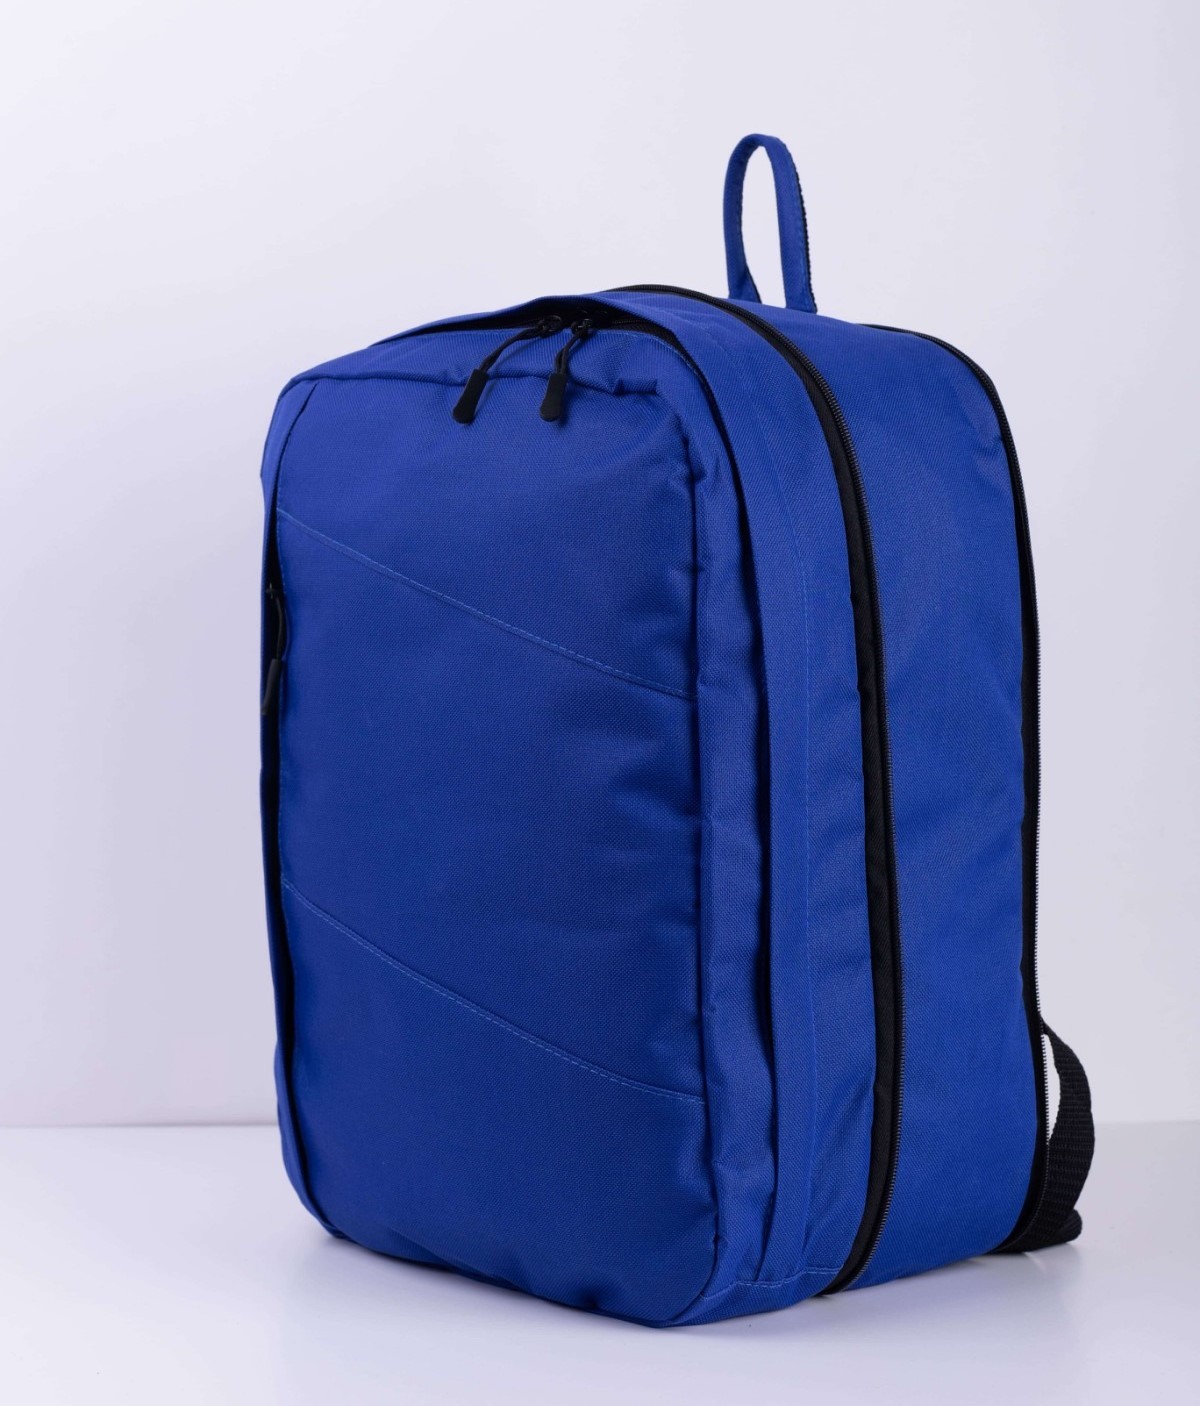 TRVLbag blue transformer | hand luggage | backpack 40x30x10 - 40x30x20